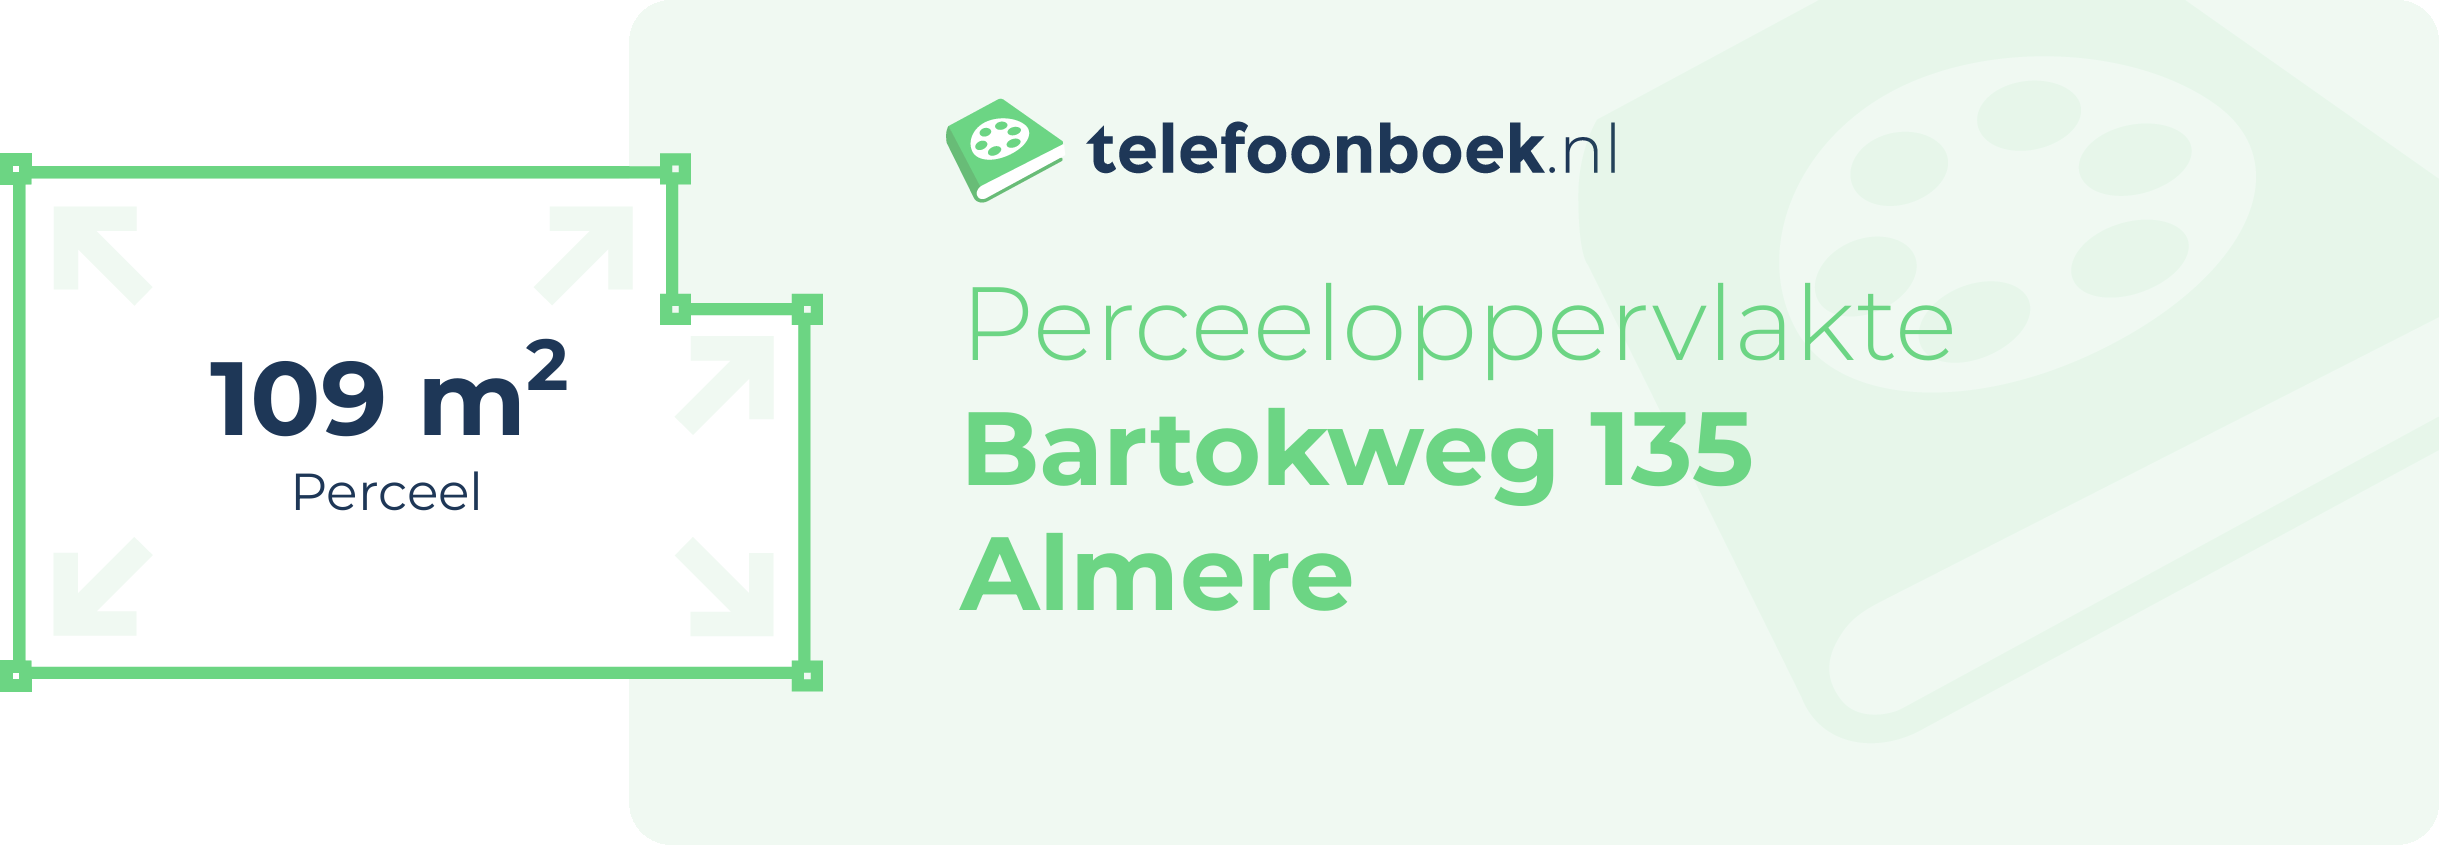 Perceeloppervlakte Bartokweg 135 Almere